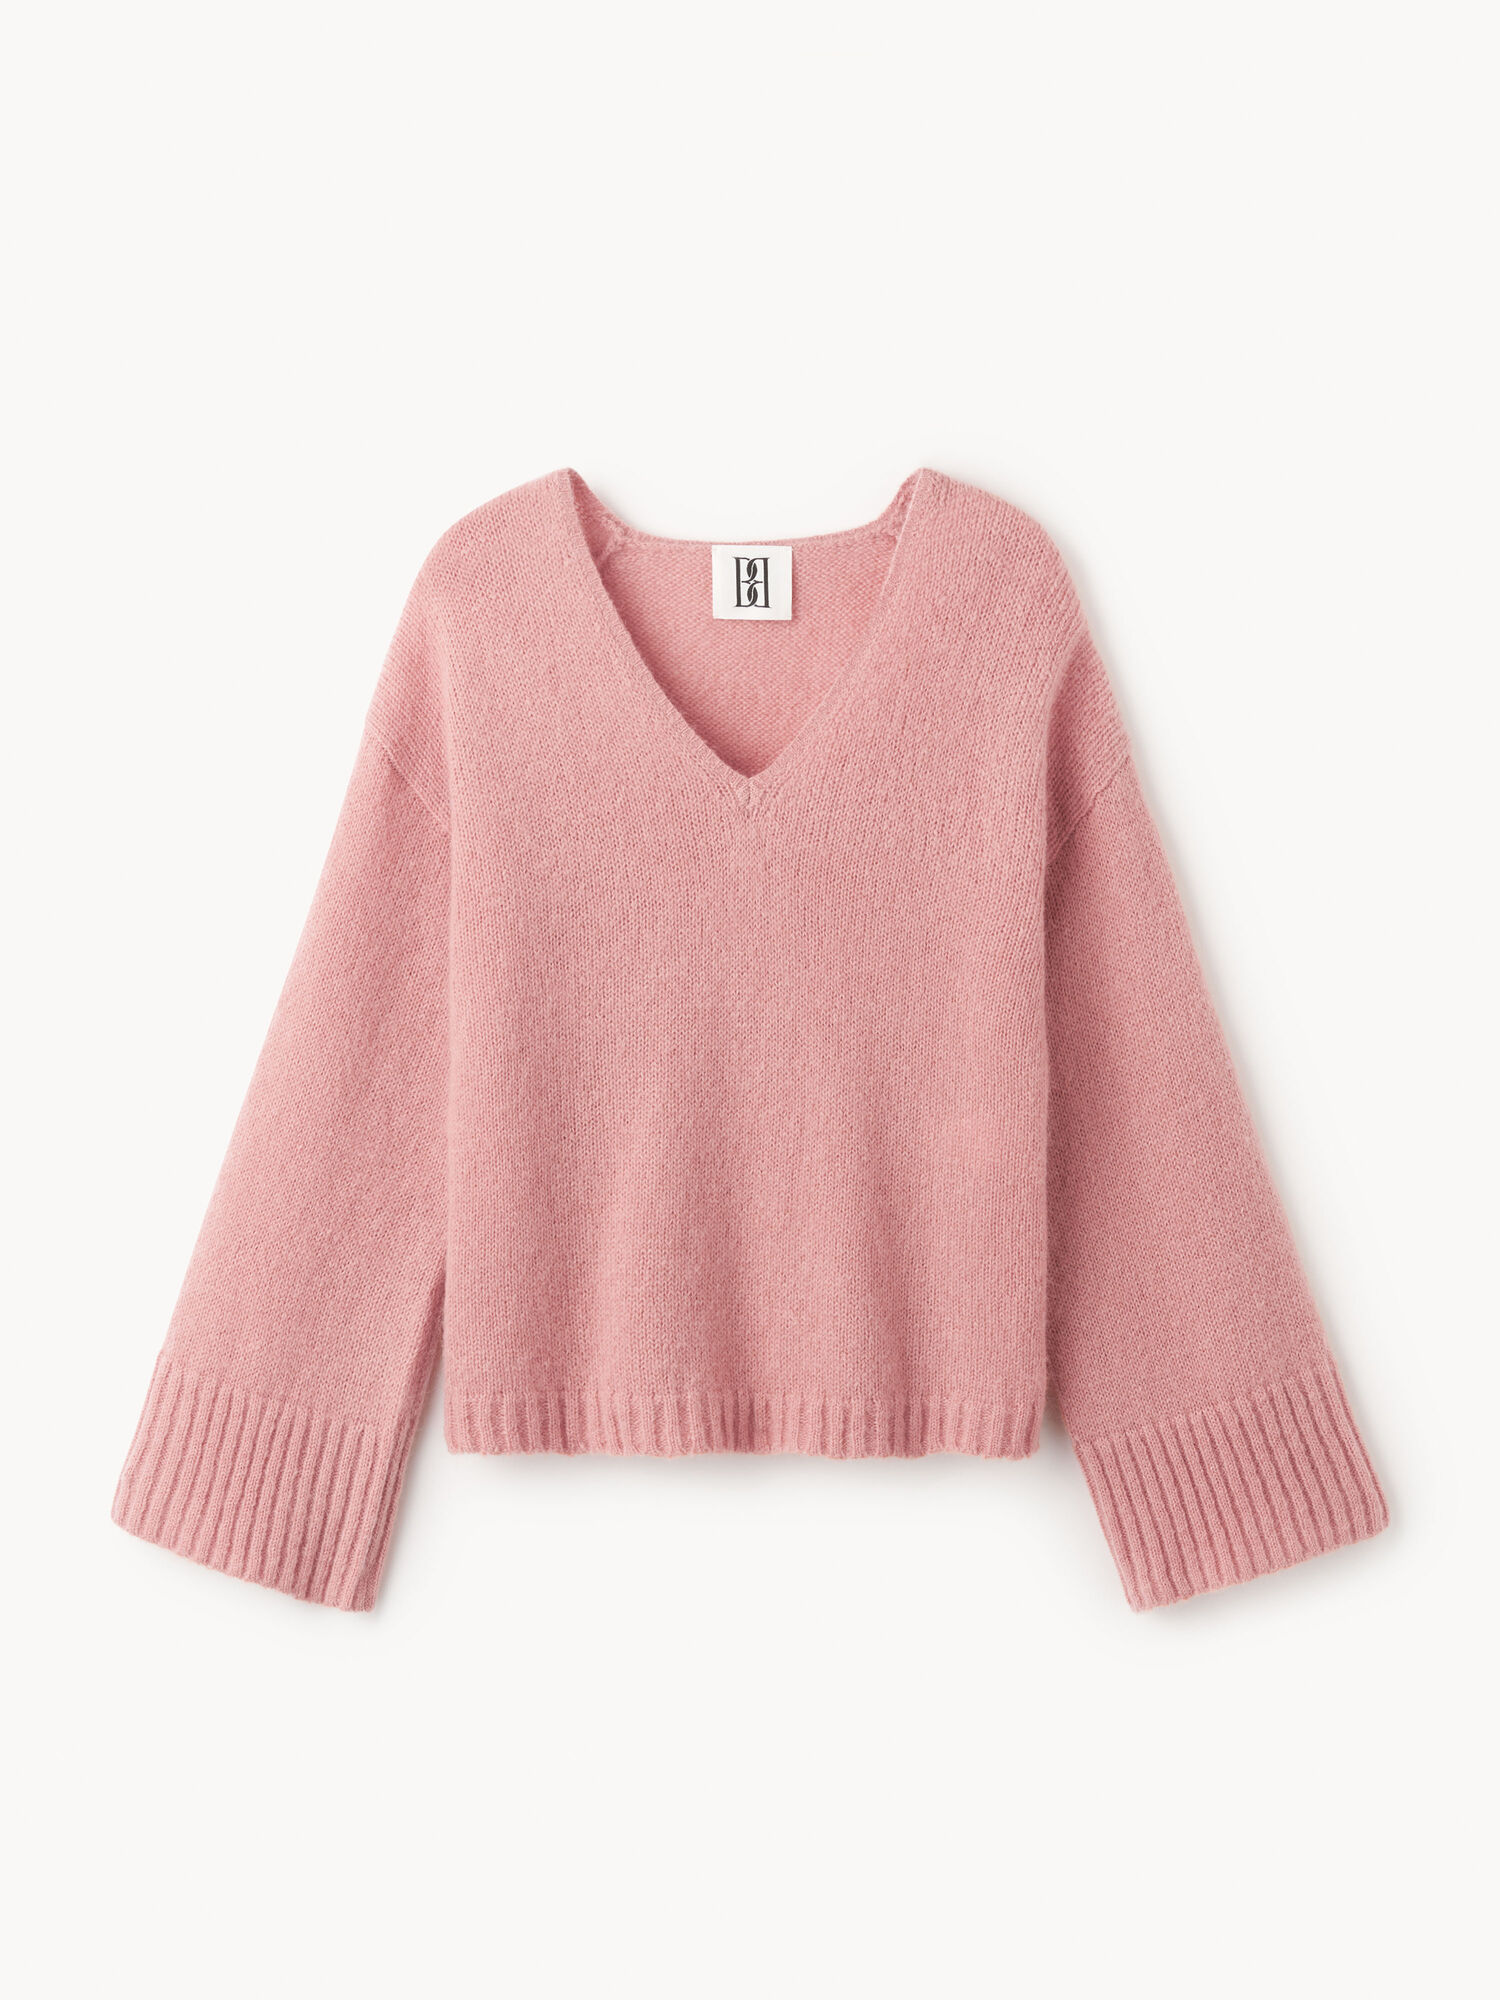 Cimone sweater